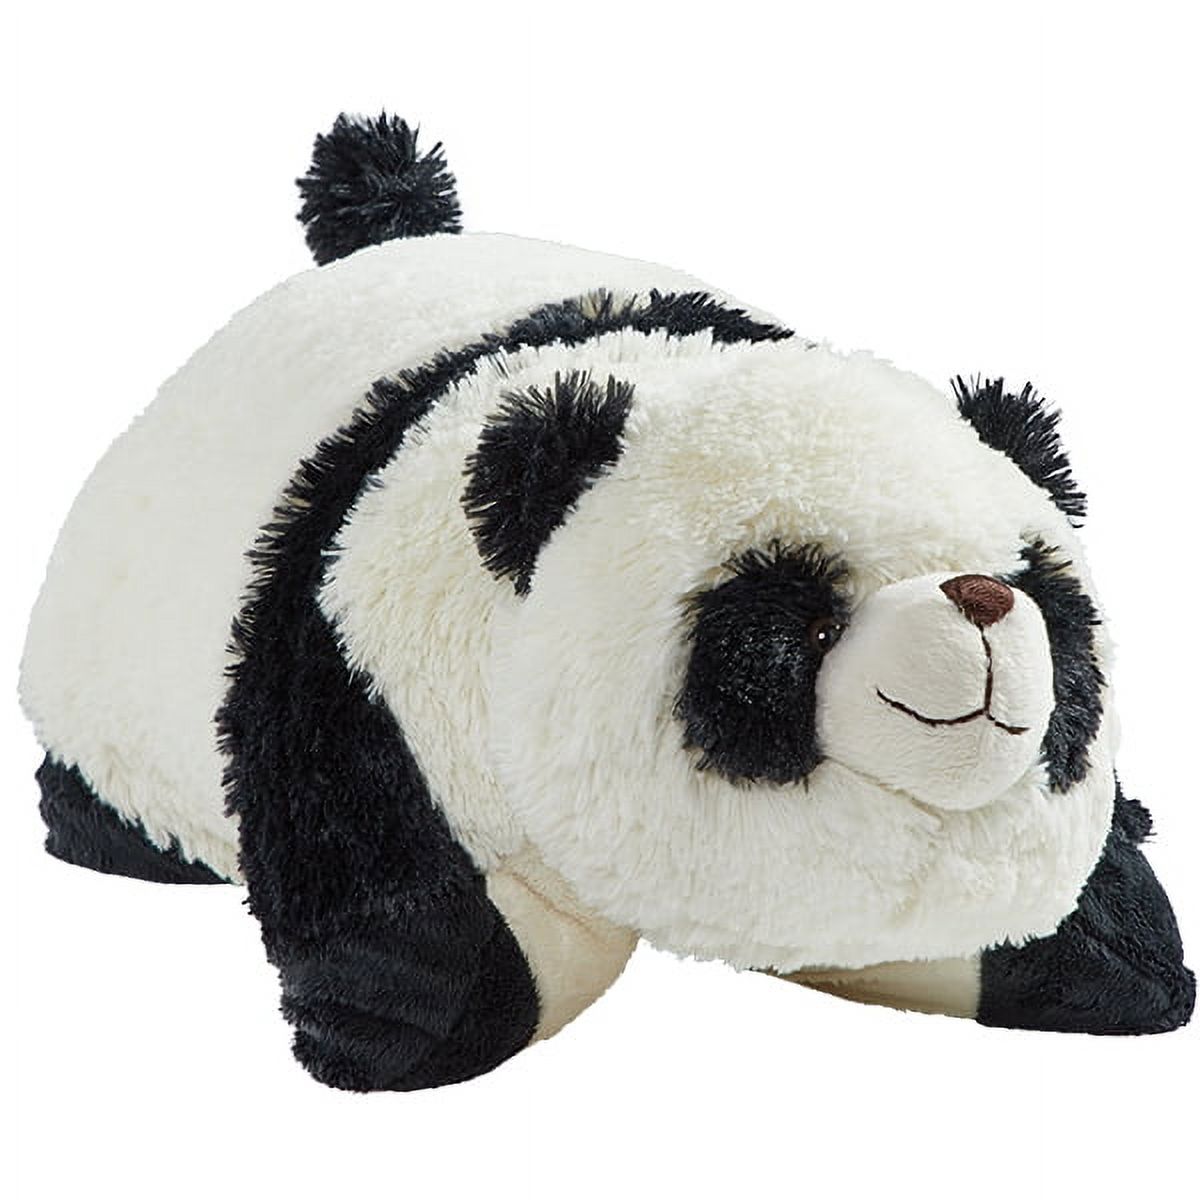 Pillow Pets Signature Comfy 18" Panda Stuffed Animal - image 1 of 3